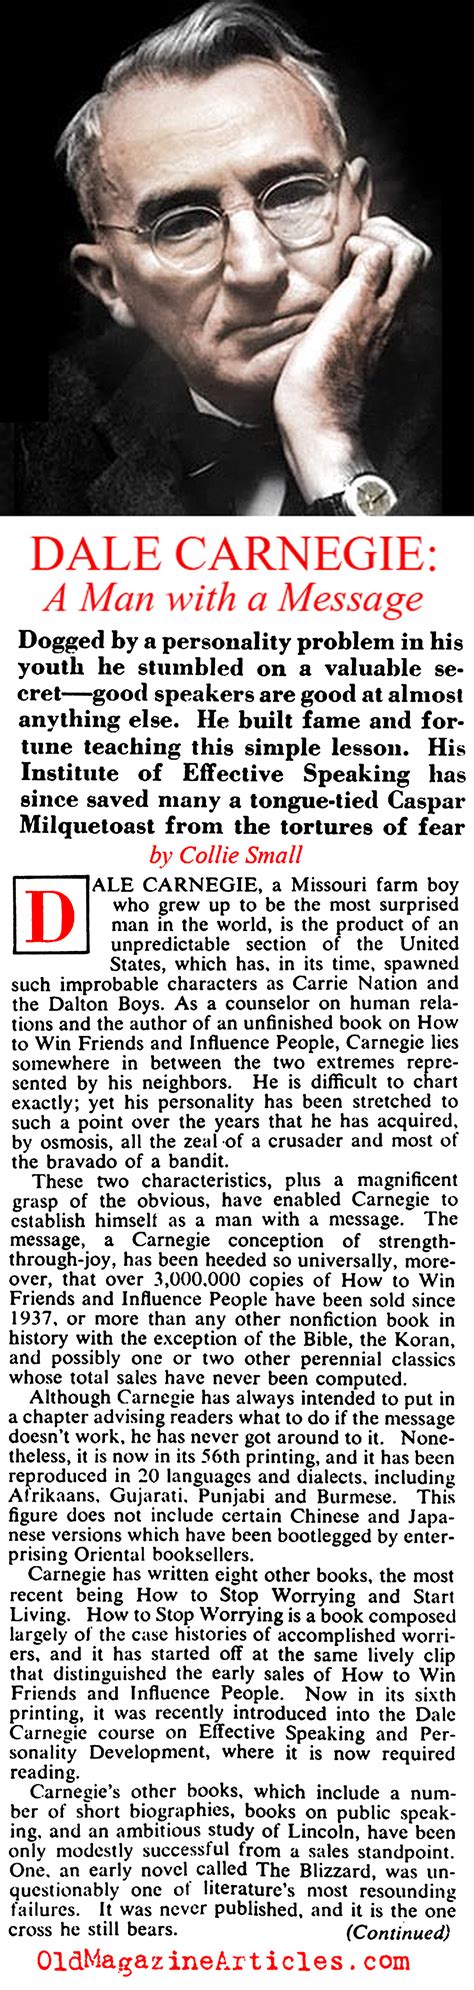 DALE CARNEGIE NEWSPAPER ARTICLE,DALE CARNEGIE MAGAZINE ARTICLE 1949,WHO WAS DALE CARNEGIE ...